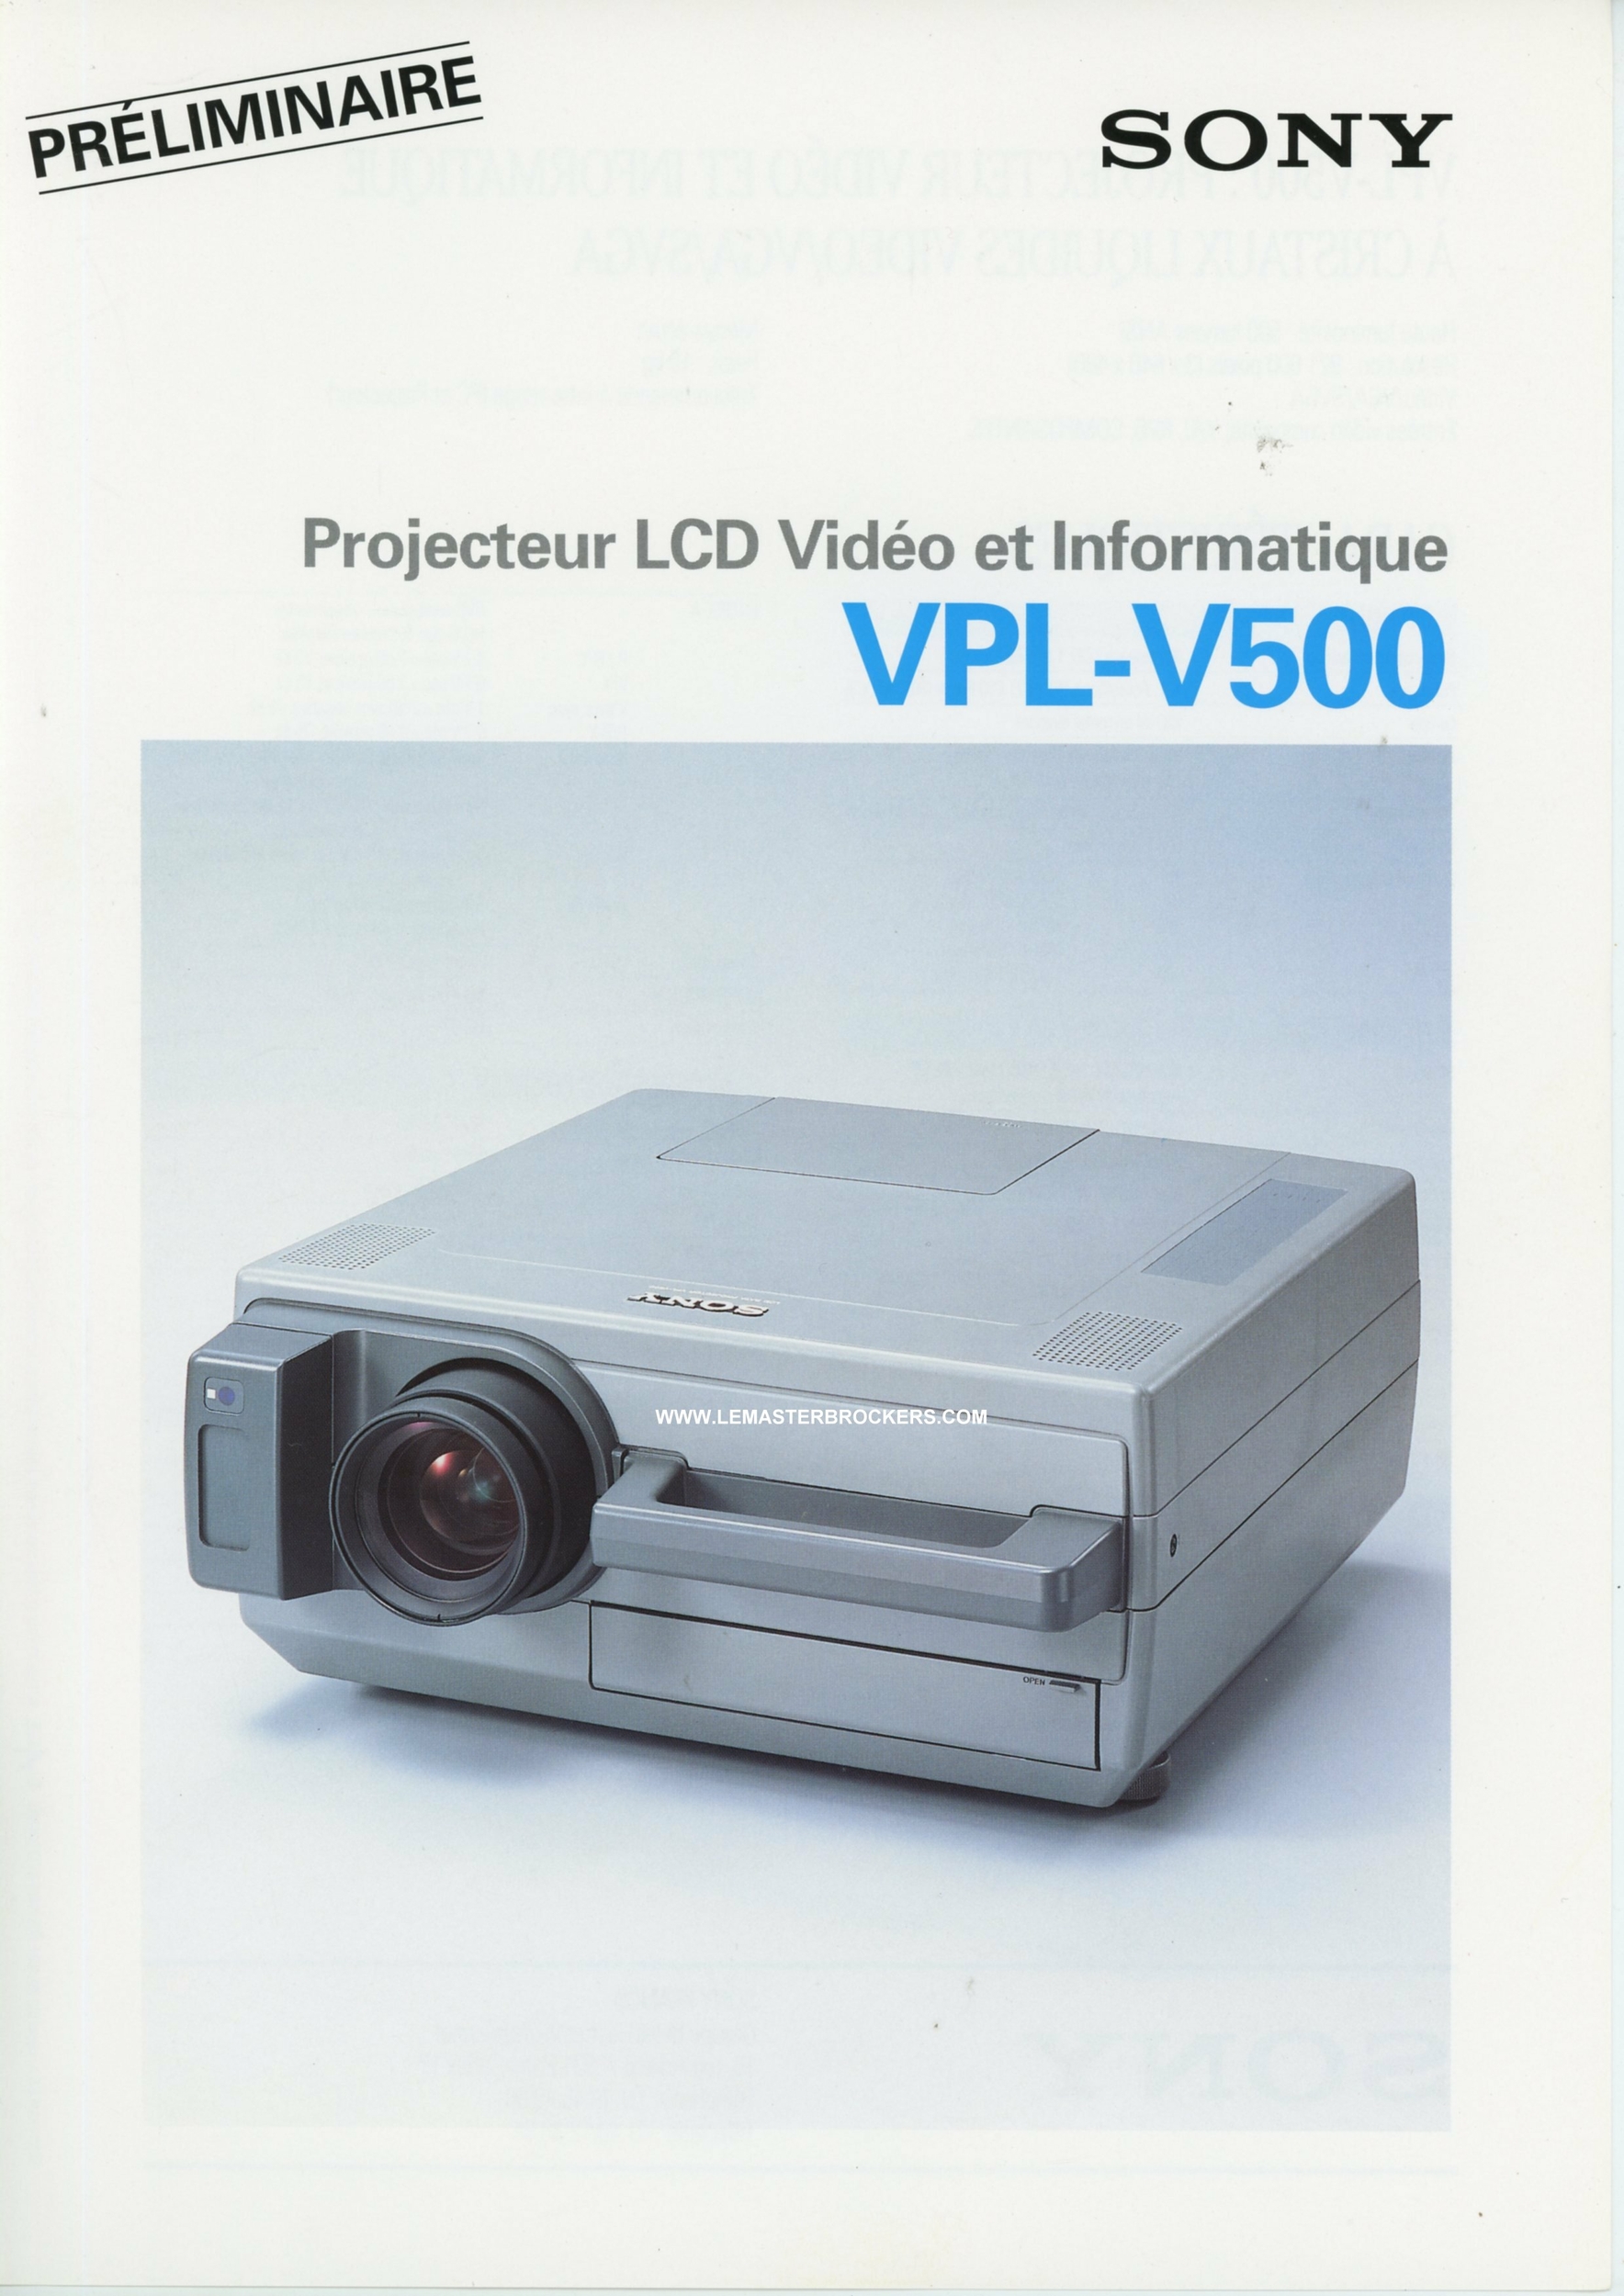 SONY-VPL-V500-BROCHURE-PROSPEKT-LEMASTERBROCKERS-catalogue-Projecteur-vidéo